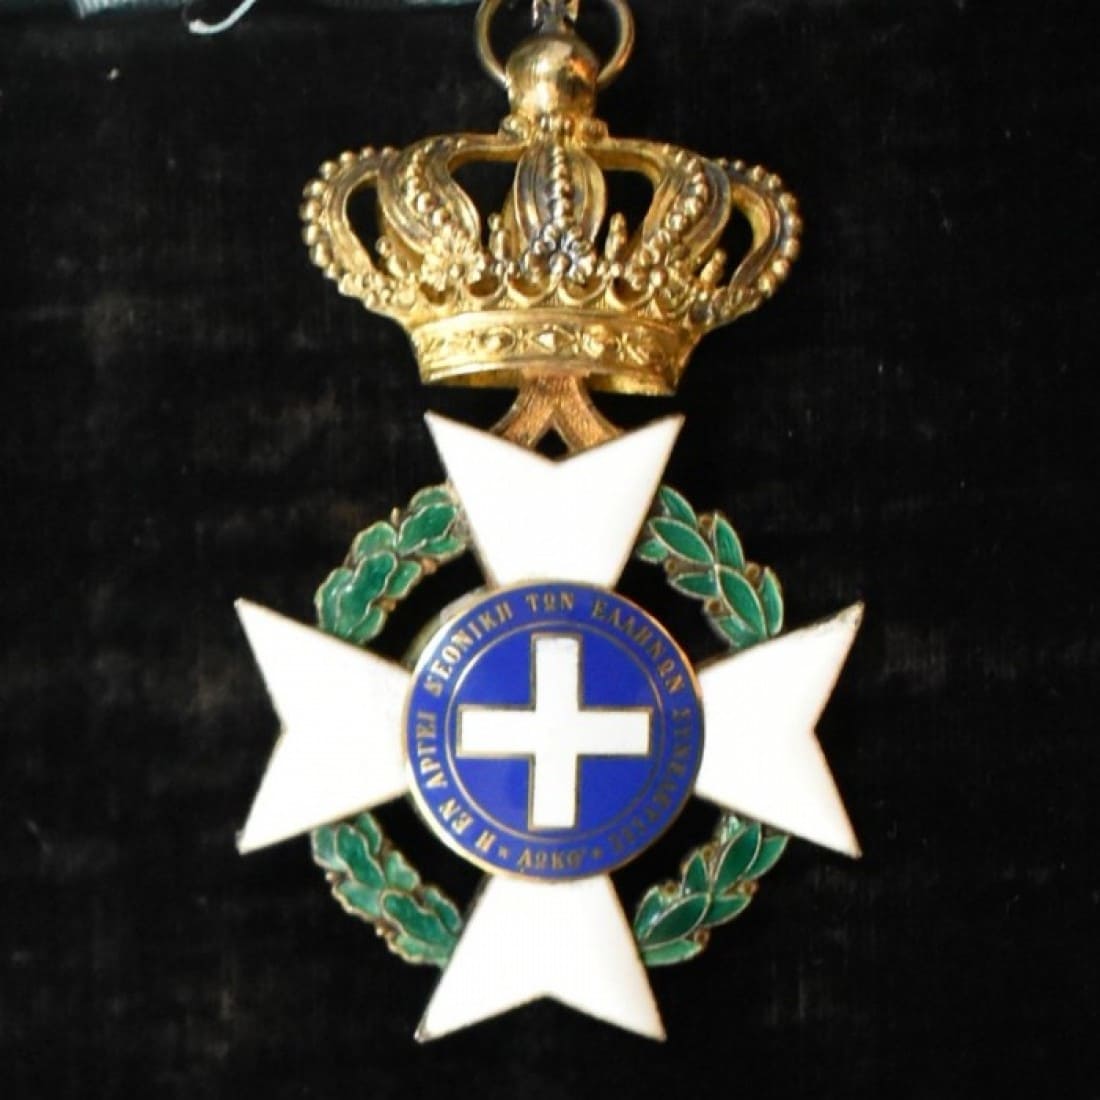 2nd class Order of  the Redeemer made by Lemaitre, Paris.jpg